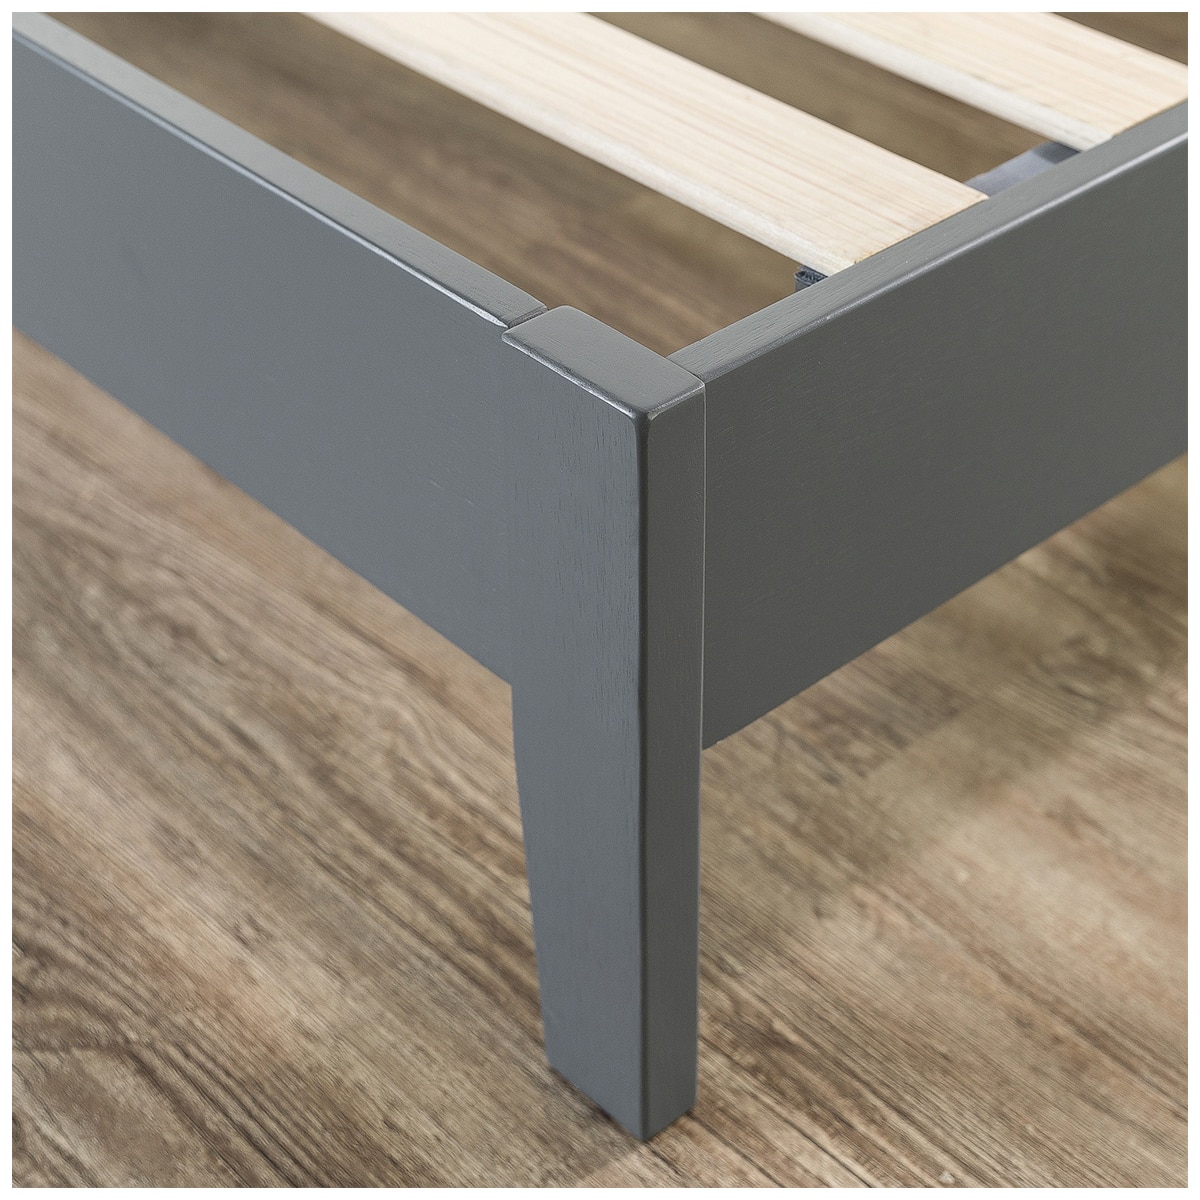 Wooden Grey Panel Bed Frame King (Zinus)